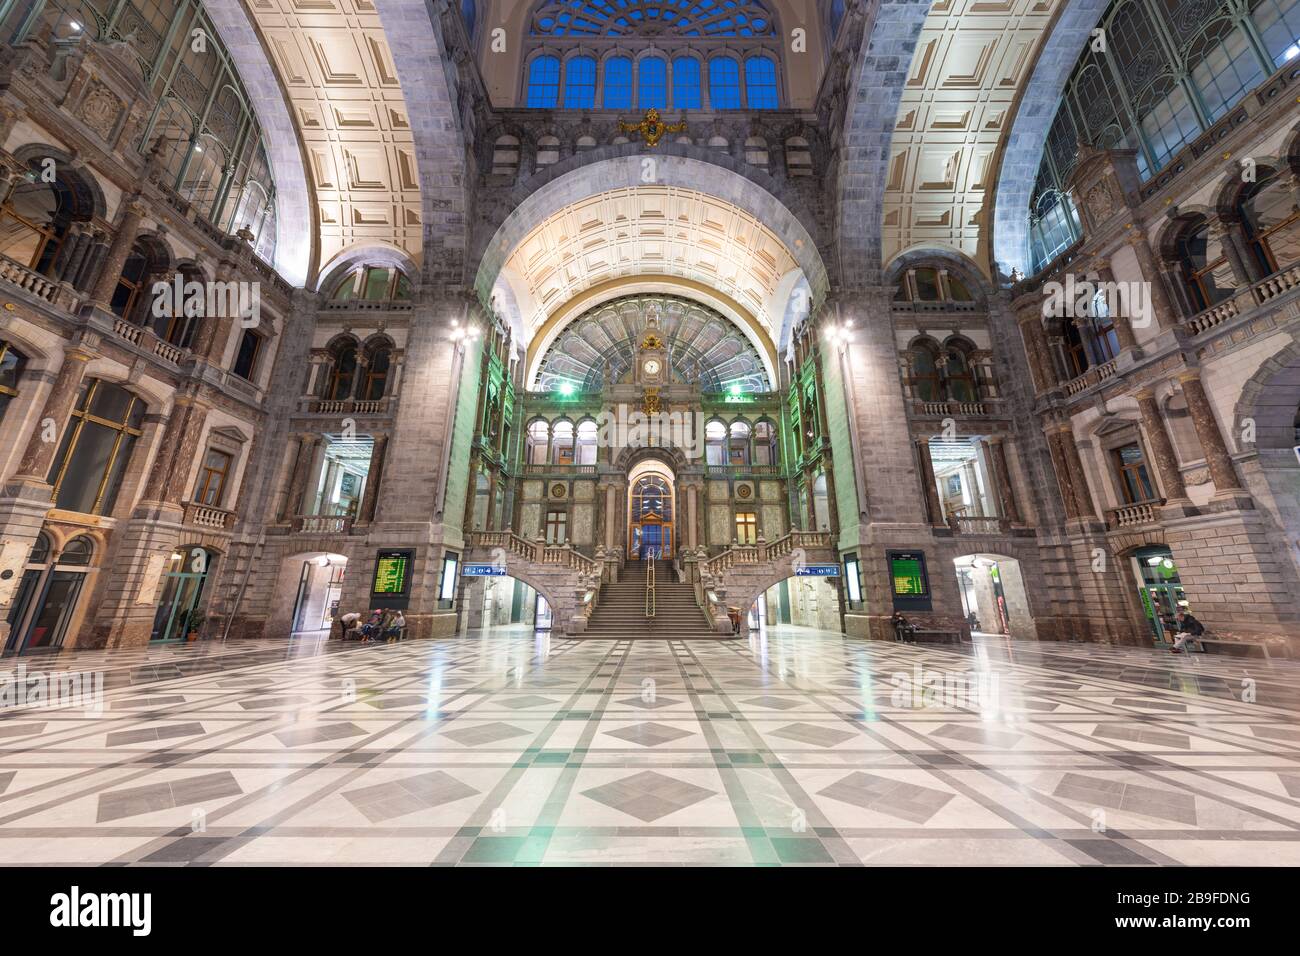 ANTWERP, BELGIUM - MARCH 5, 2020: Antwerpen-Centraal Railway Station main hall dating from 1905. Stock Photo